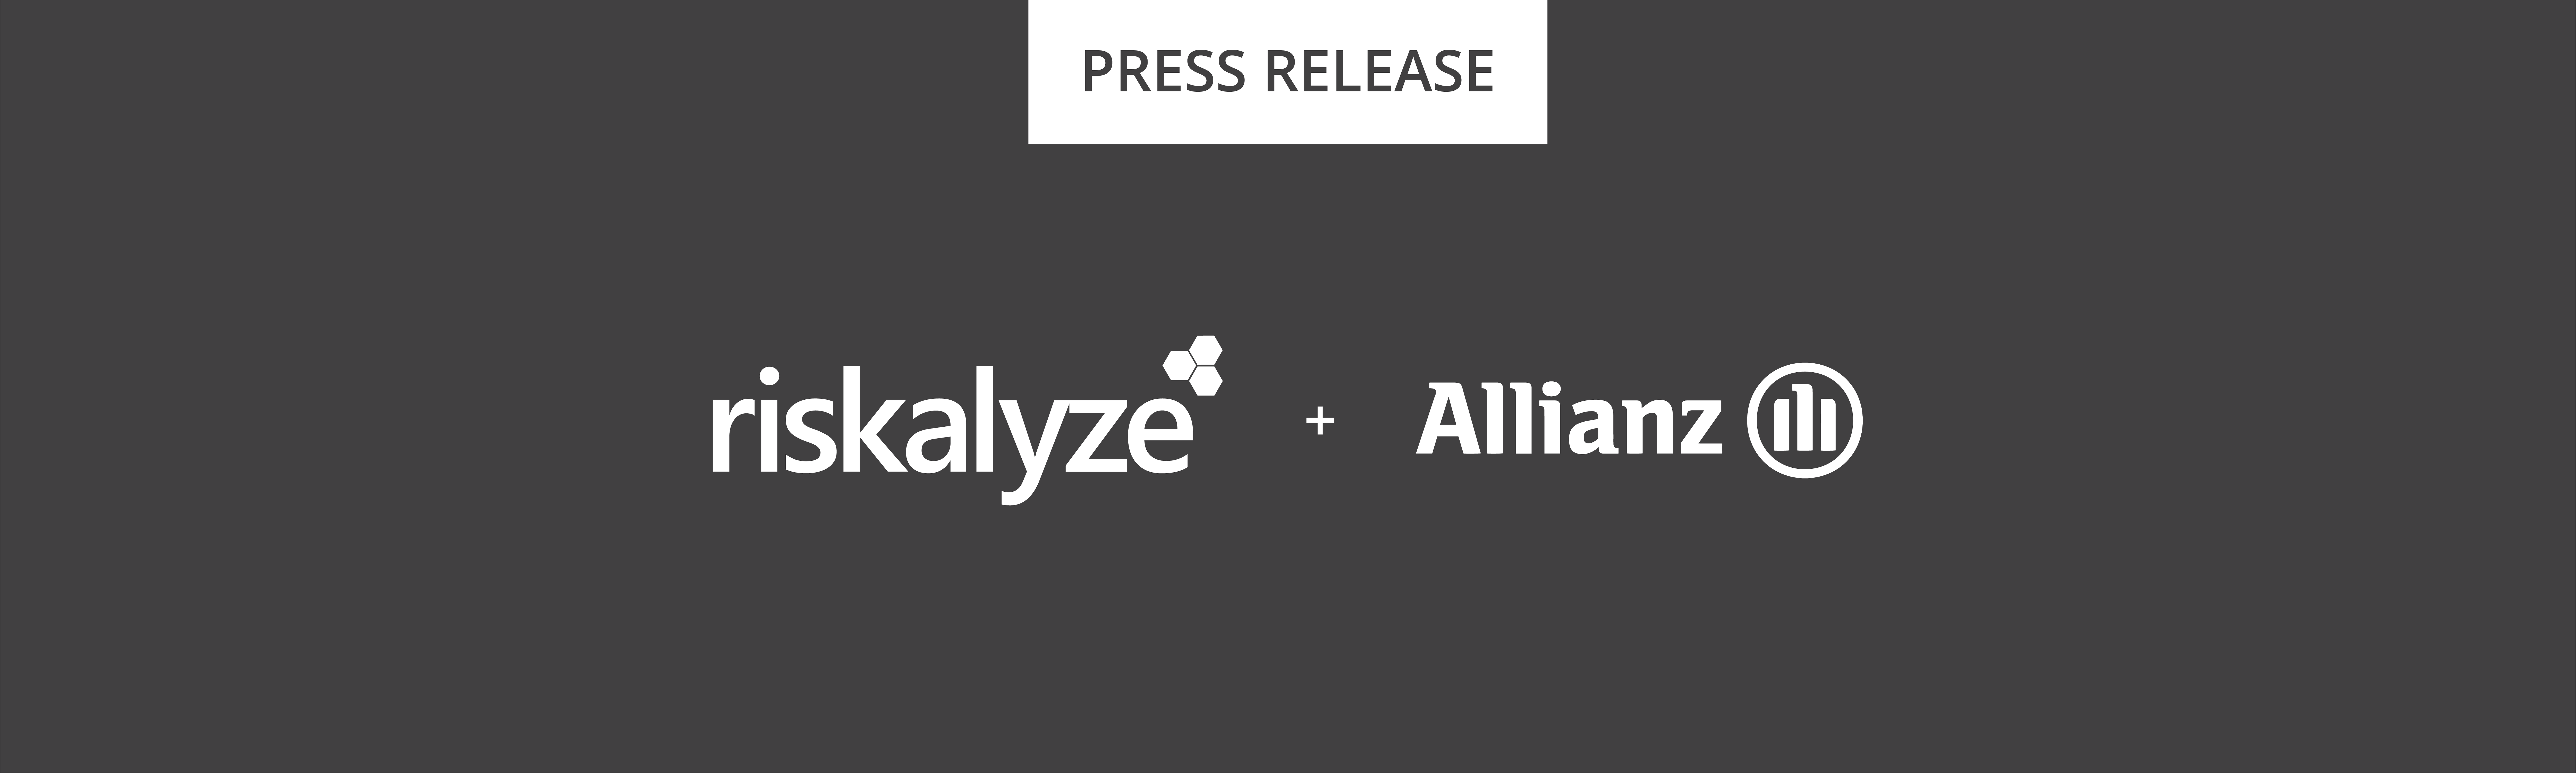 Riskalyze Allianz Press Release